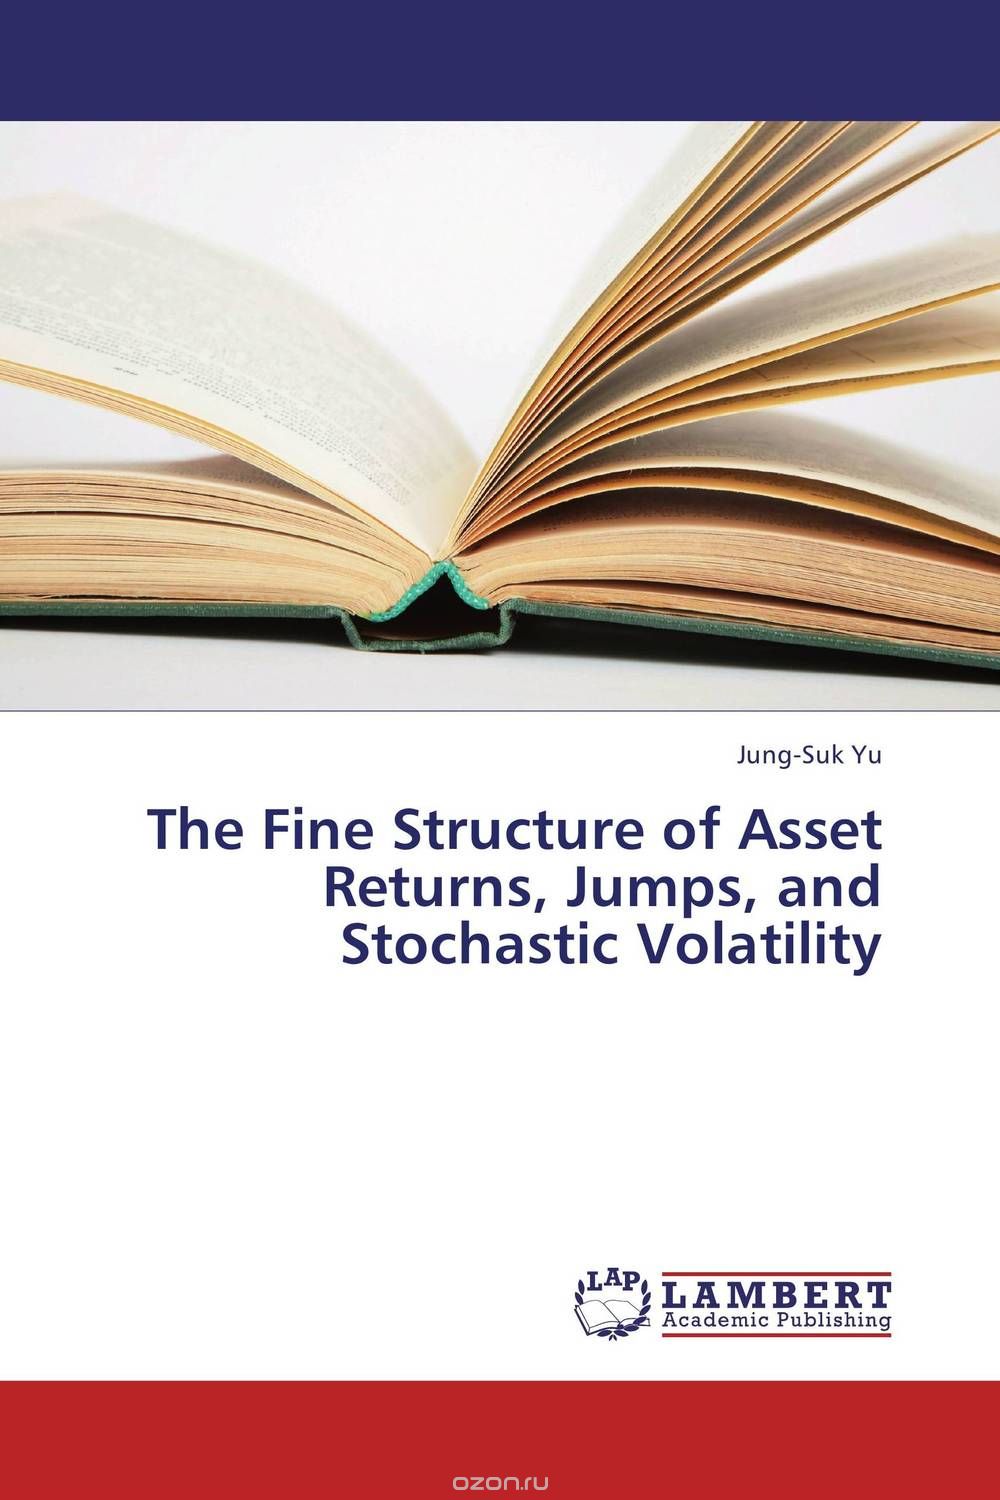 Скачать книгу "The Fine Structure of Asset Returns, Jumps, and Stochastic Volatility"